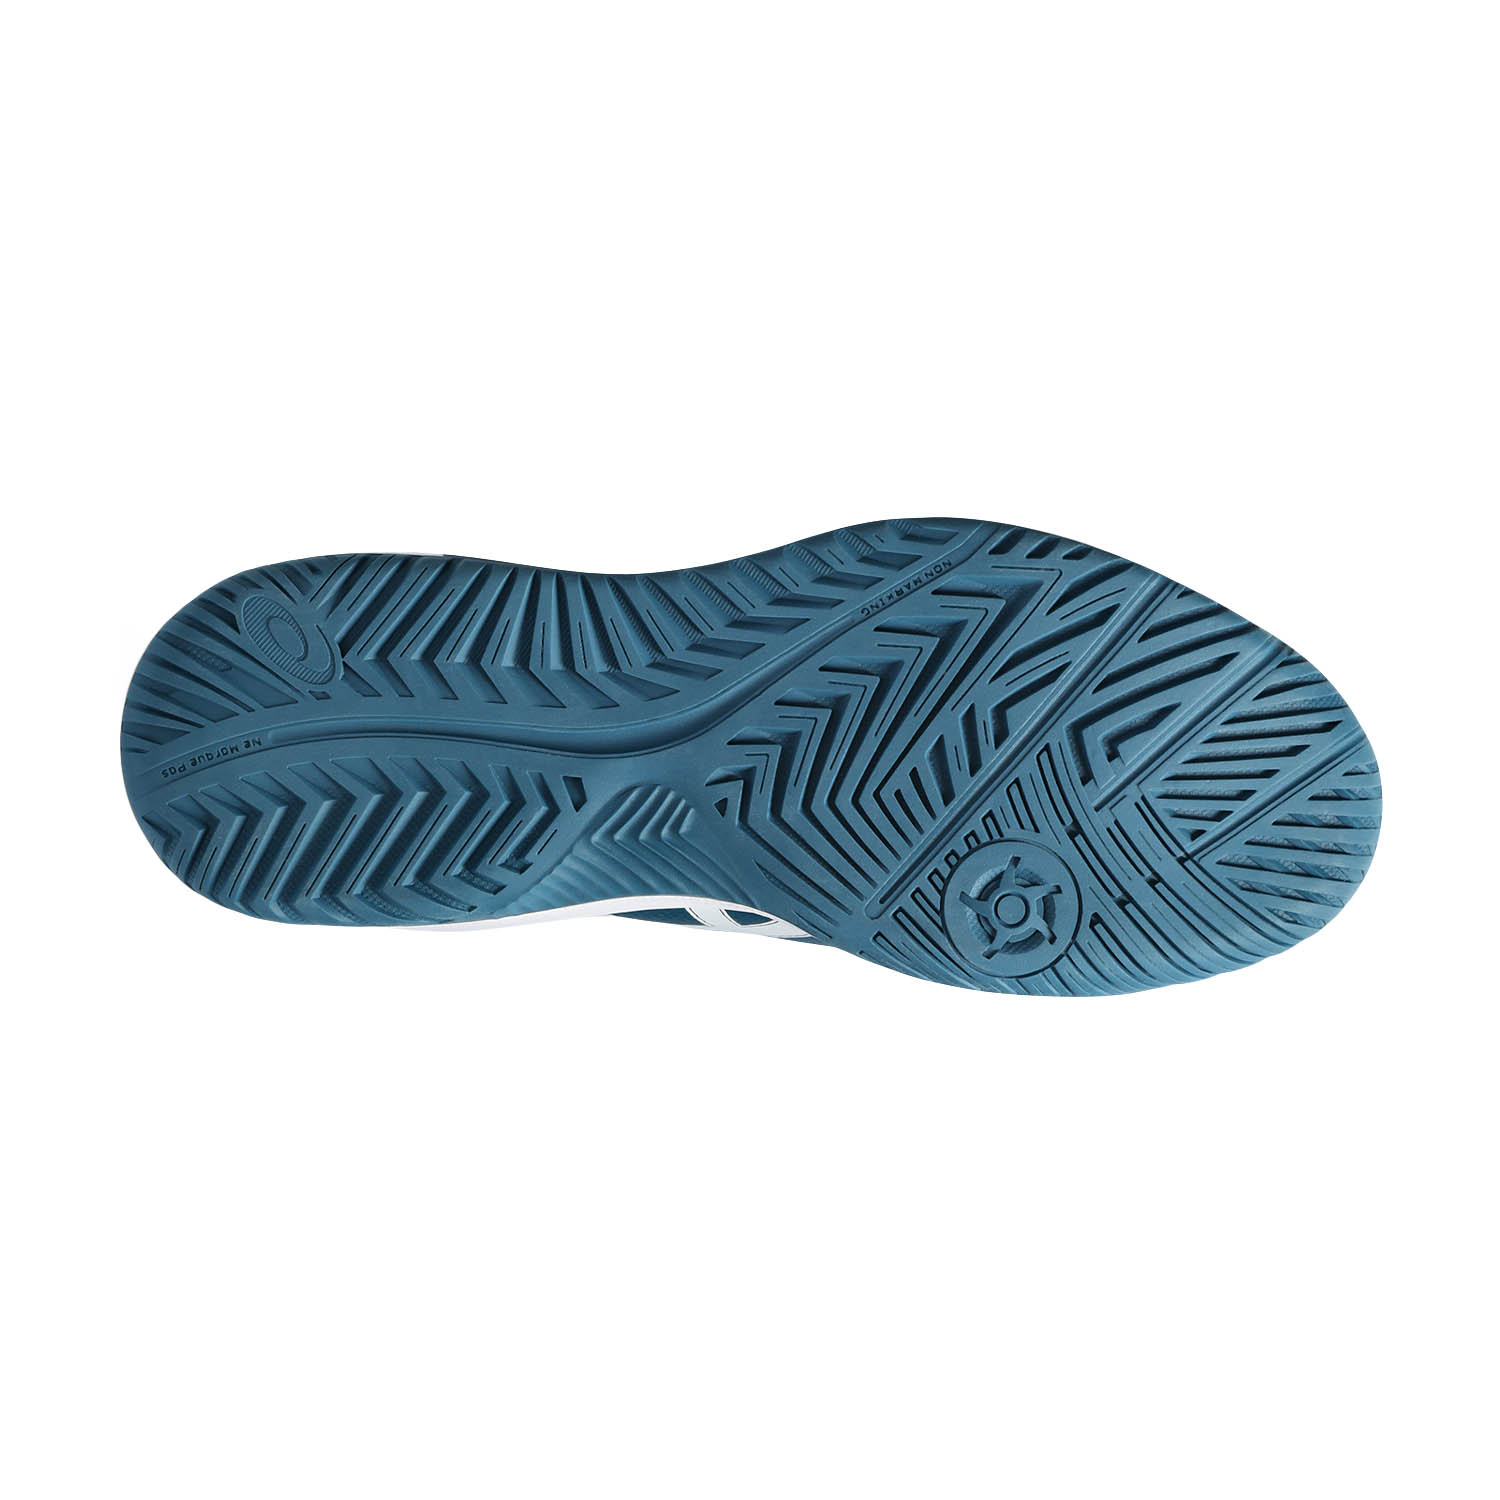 Asics Gel Dedicate 8 Men's Tennis Shoes - Restful Teal/White